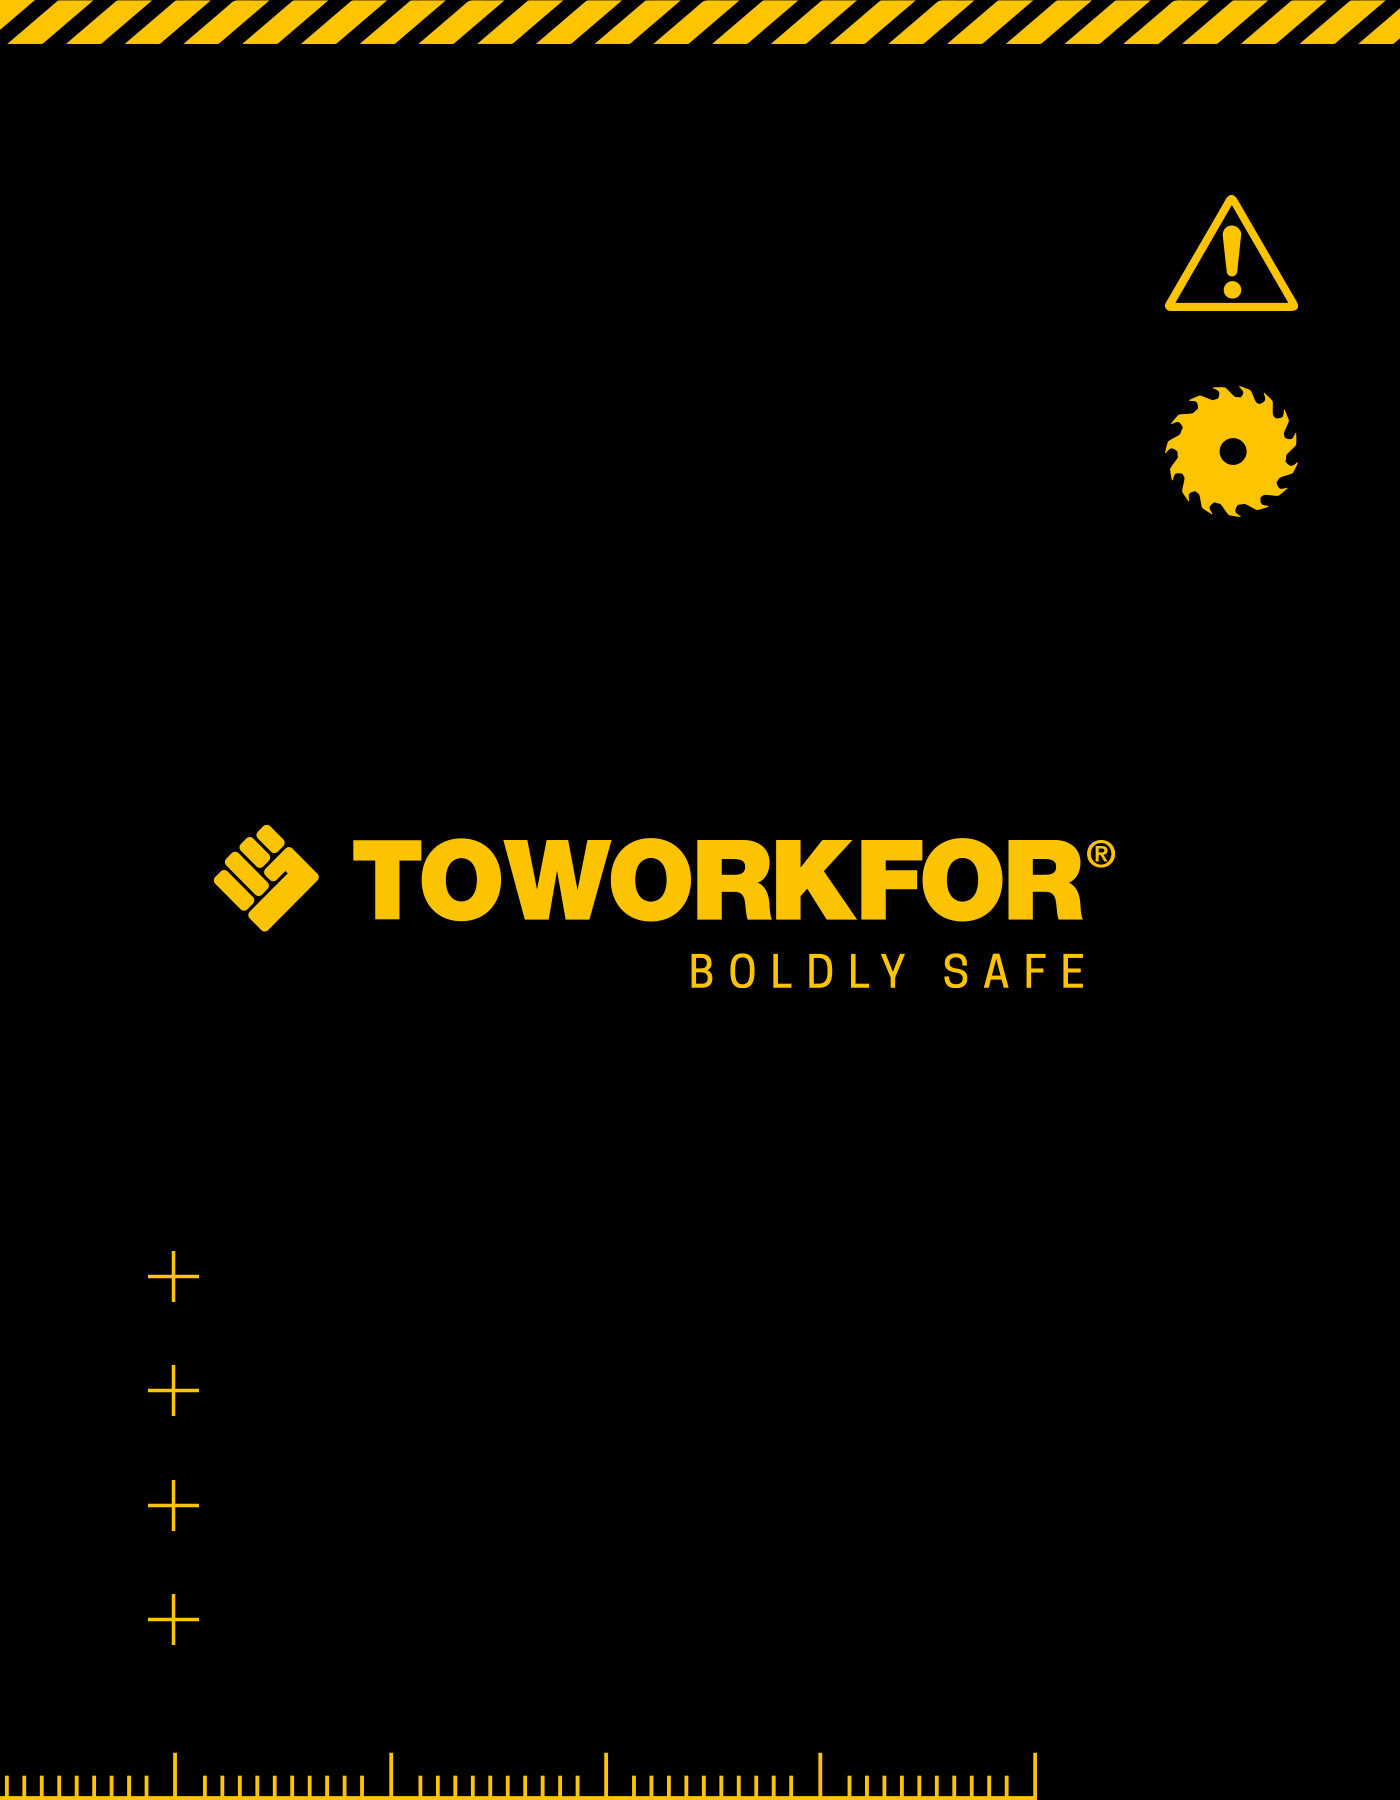 toworkfor